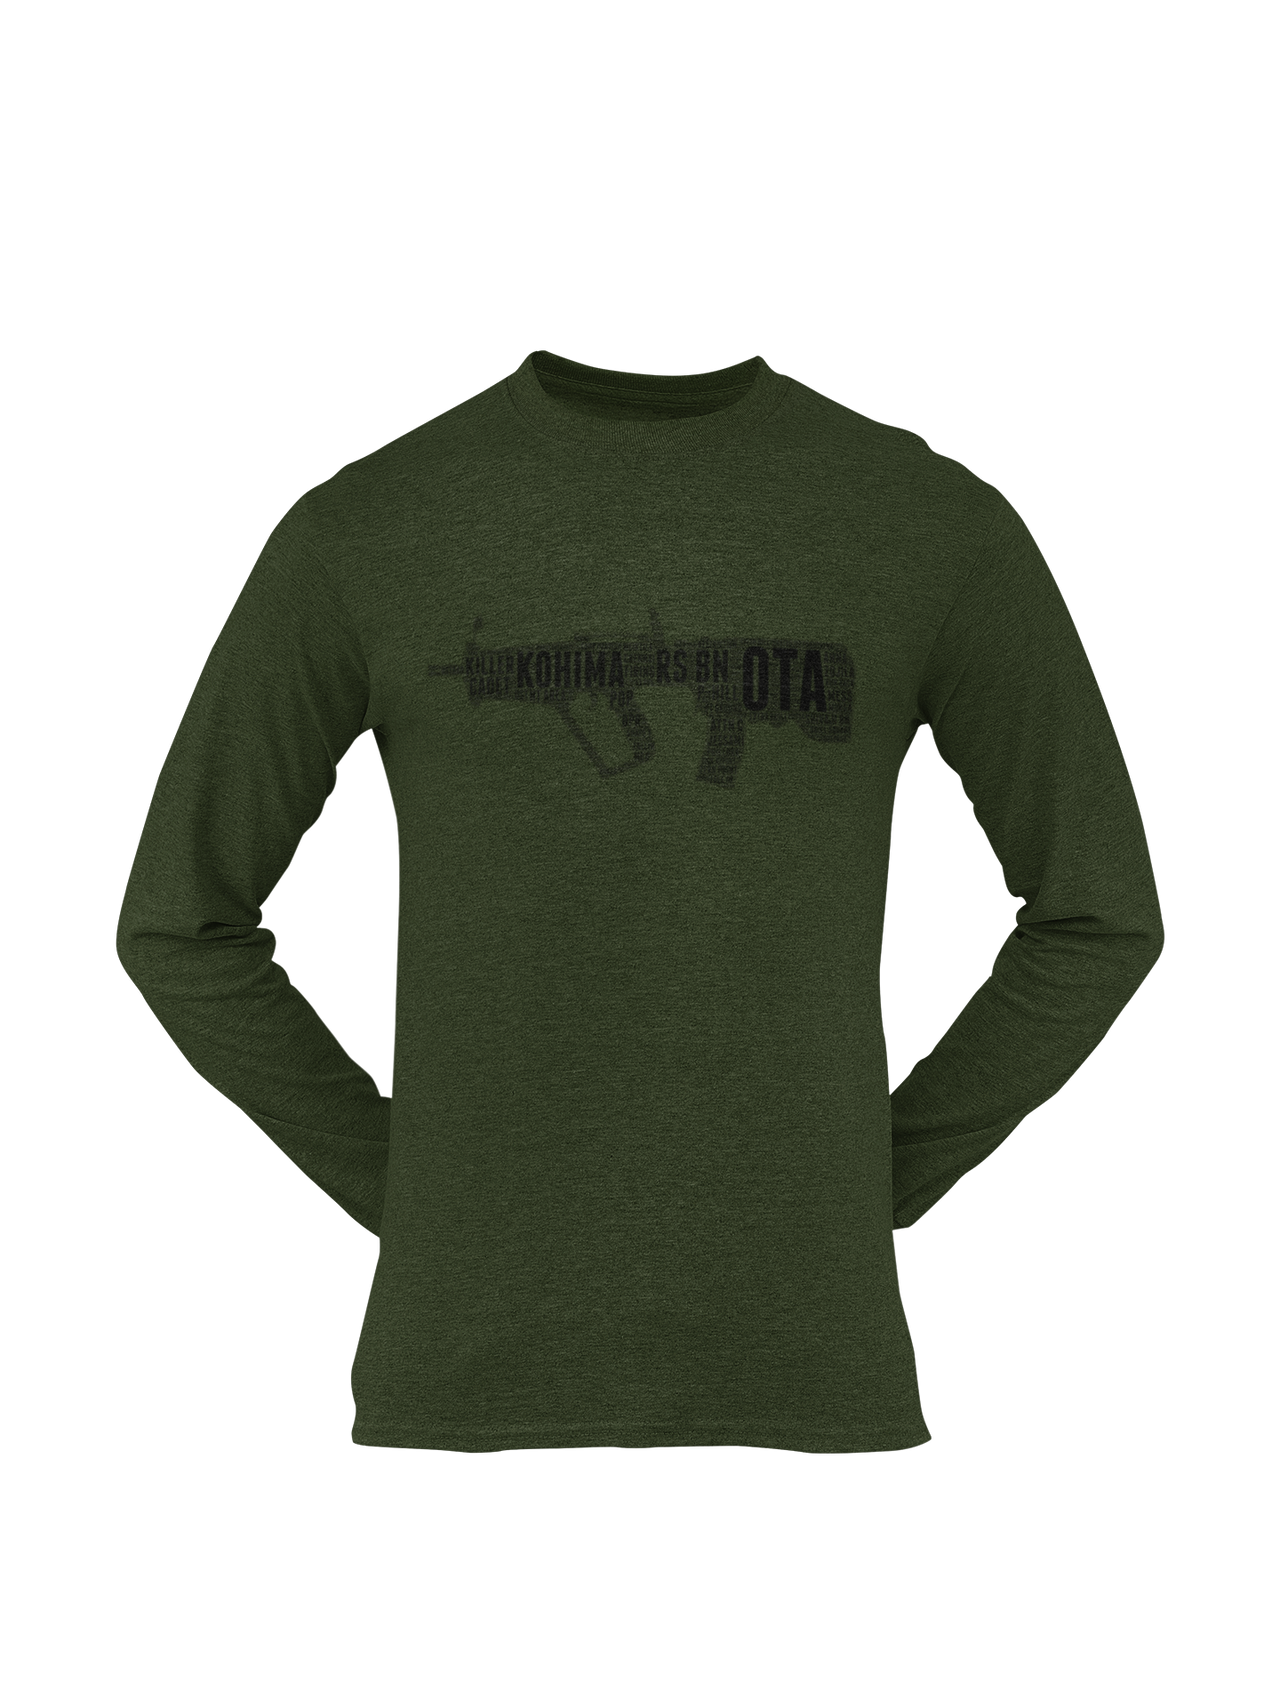 OTA T-shirt - Word Cloud Kohima - Tavor (Men)